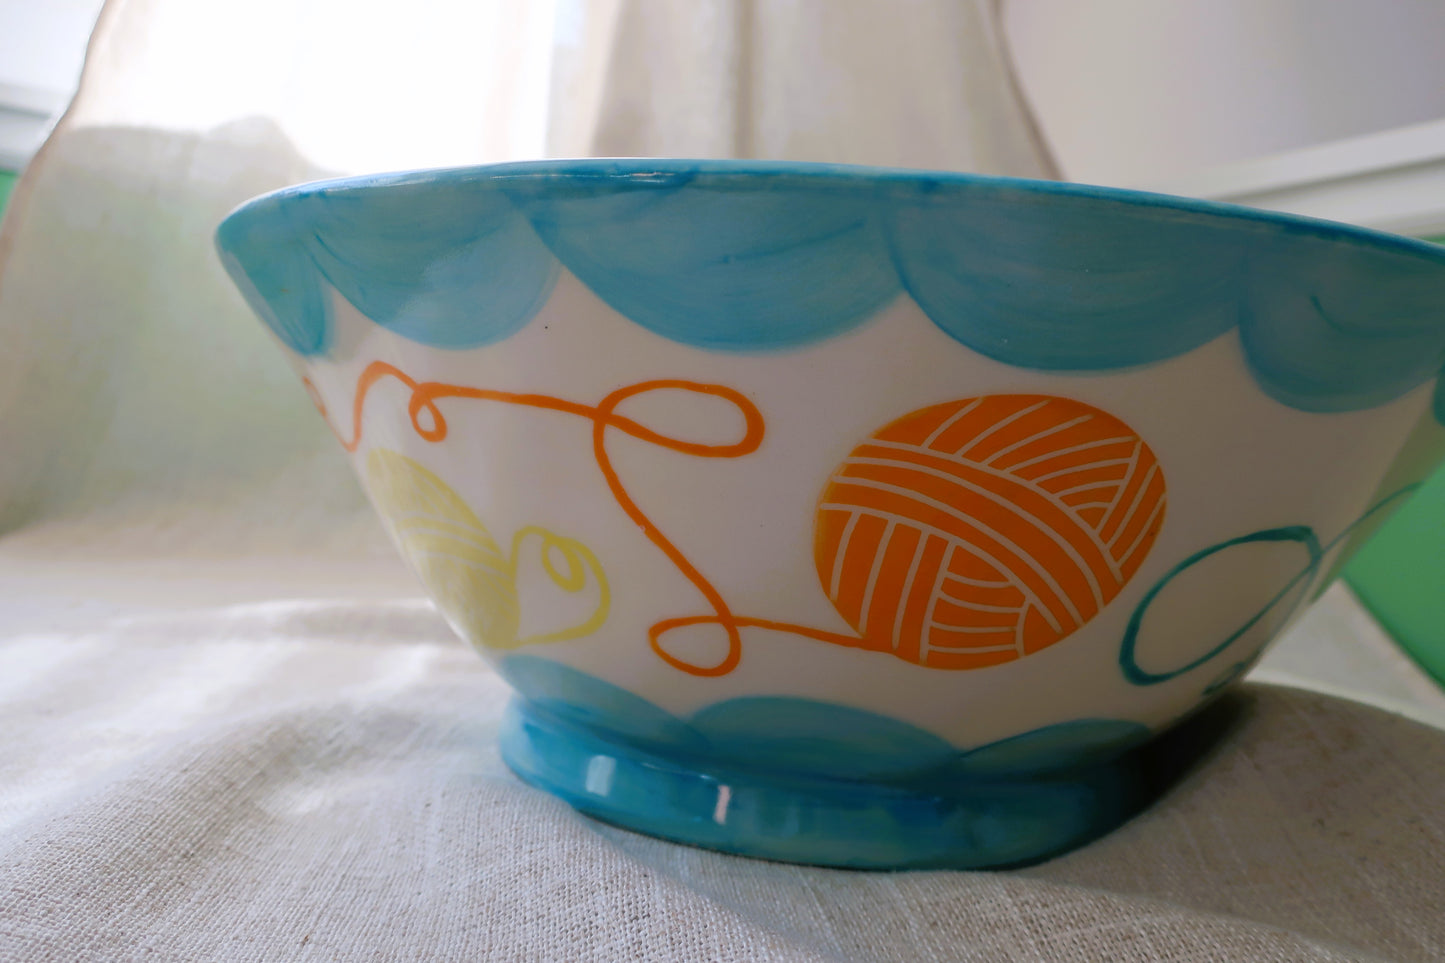 Cat Fruit Display Bowl - Yarn